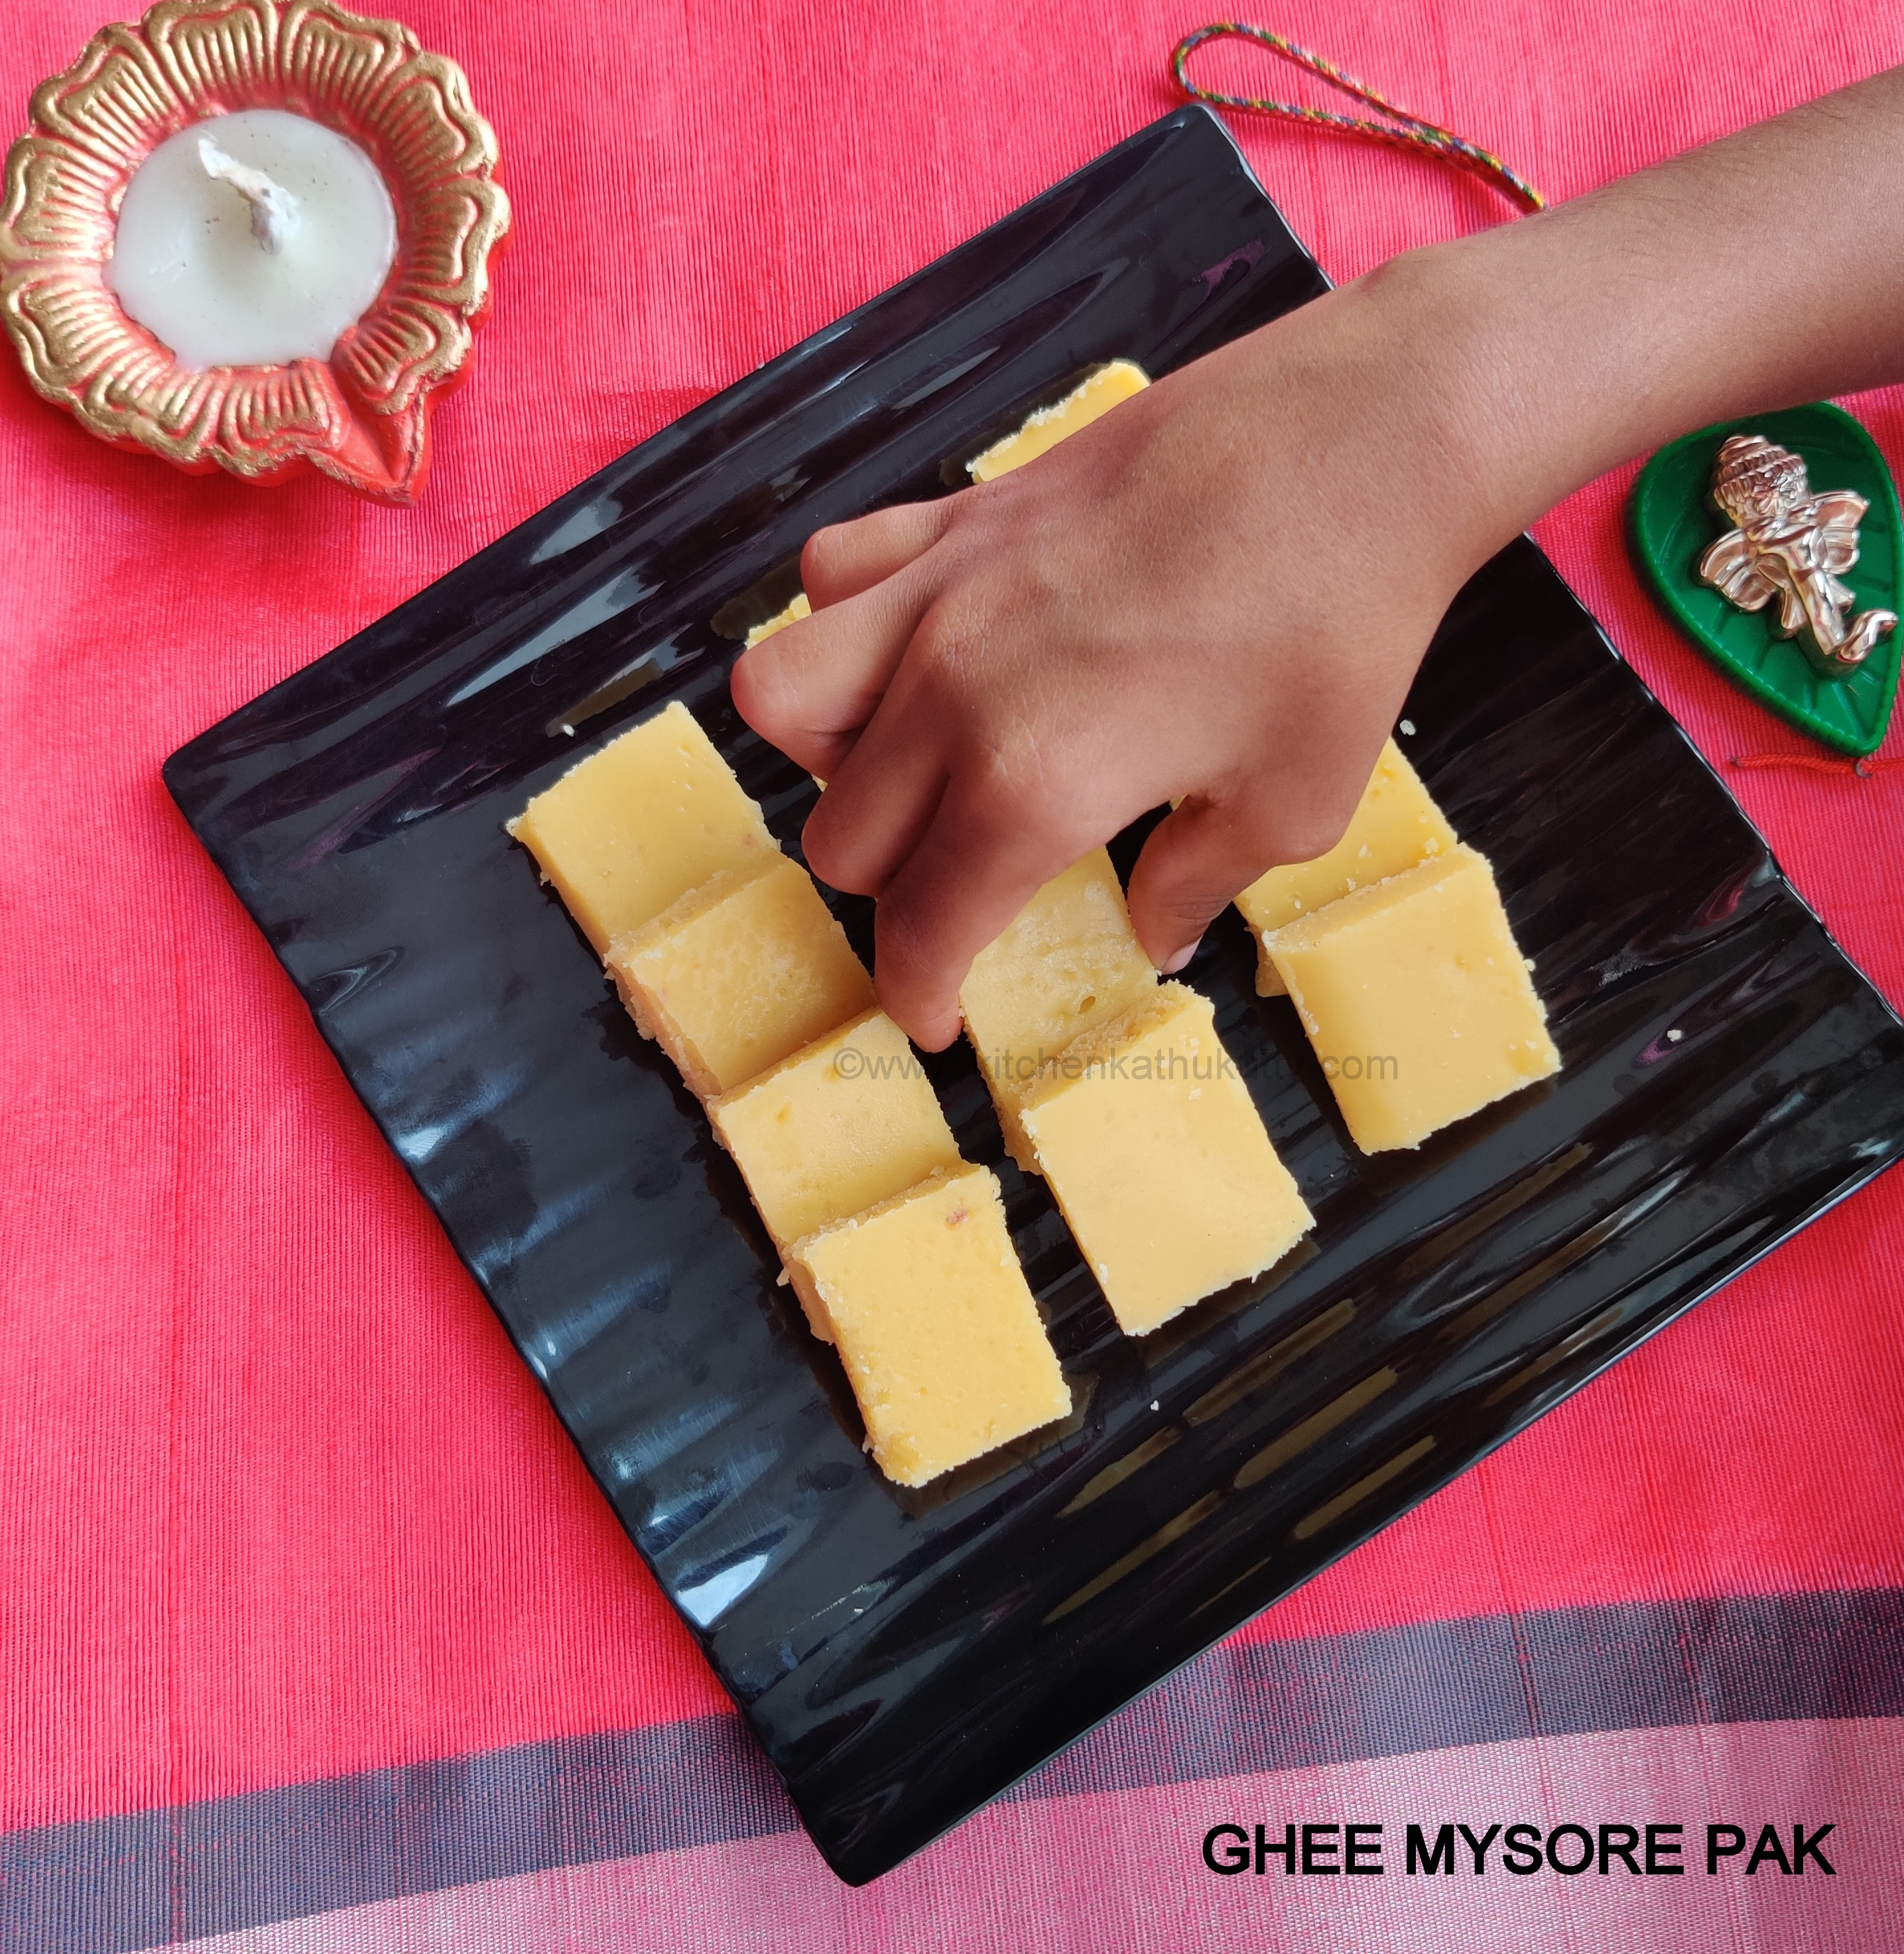 ghee mysore pak recipe